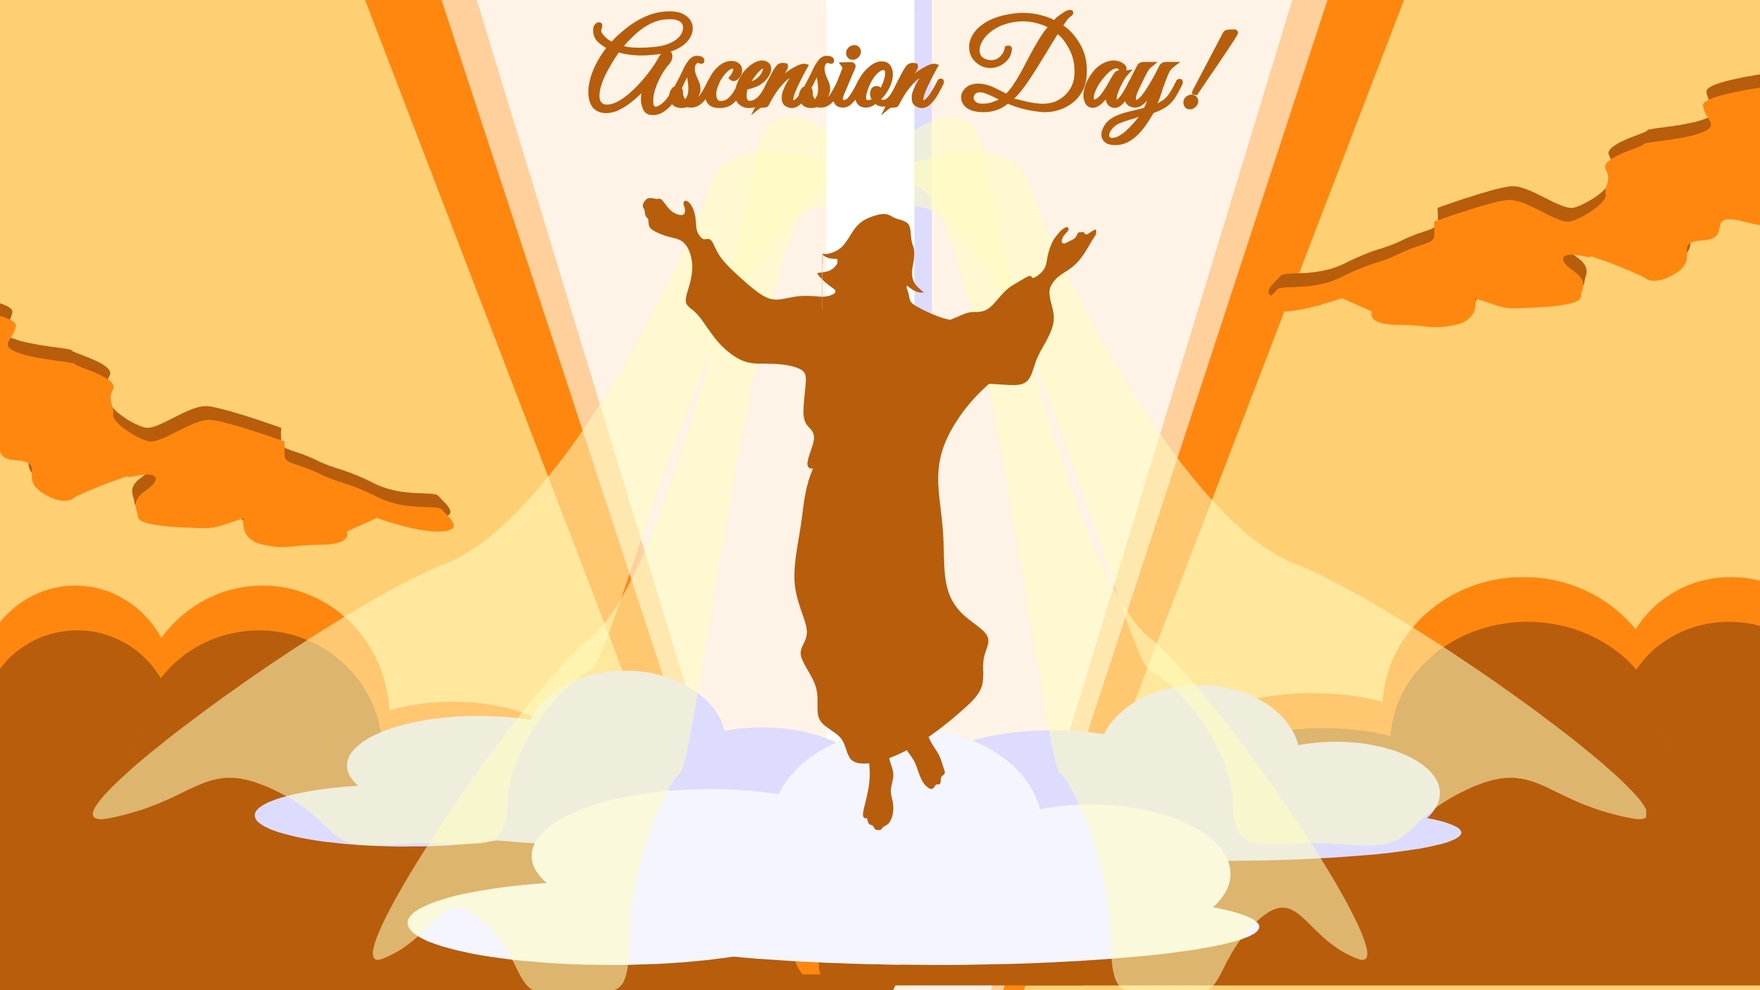 Ascension Day Design Background